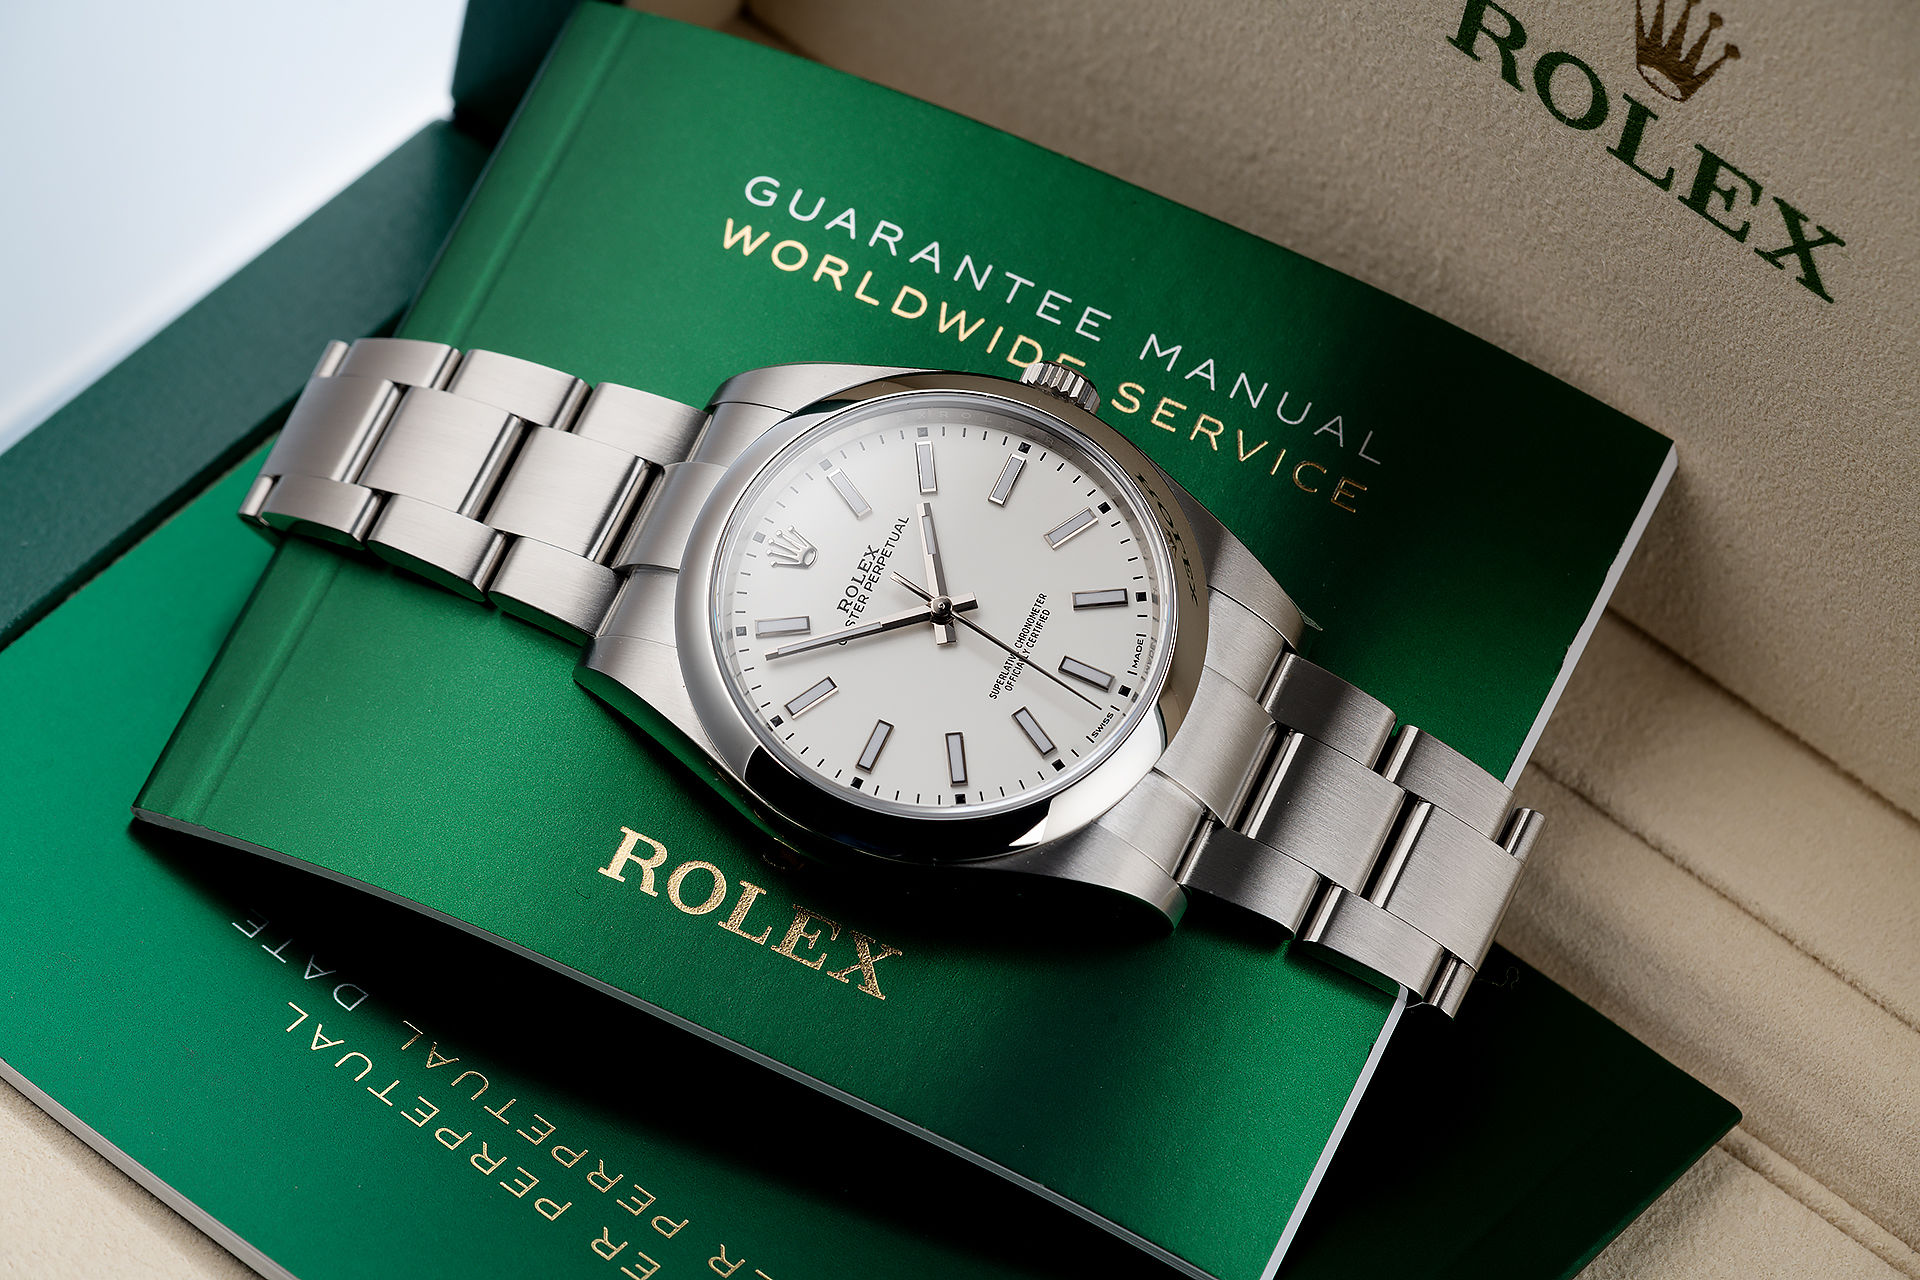 ref 114300 | 5 Year Warranty 'Full Set' | Rolex Oyster Perpetual